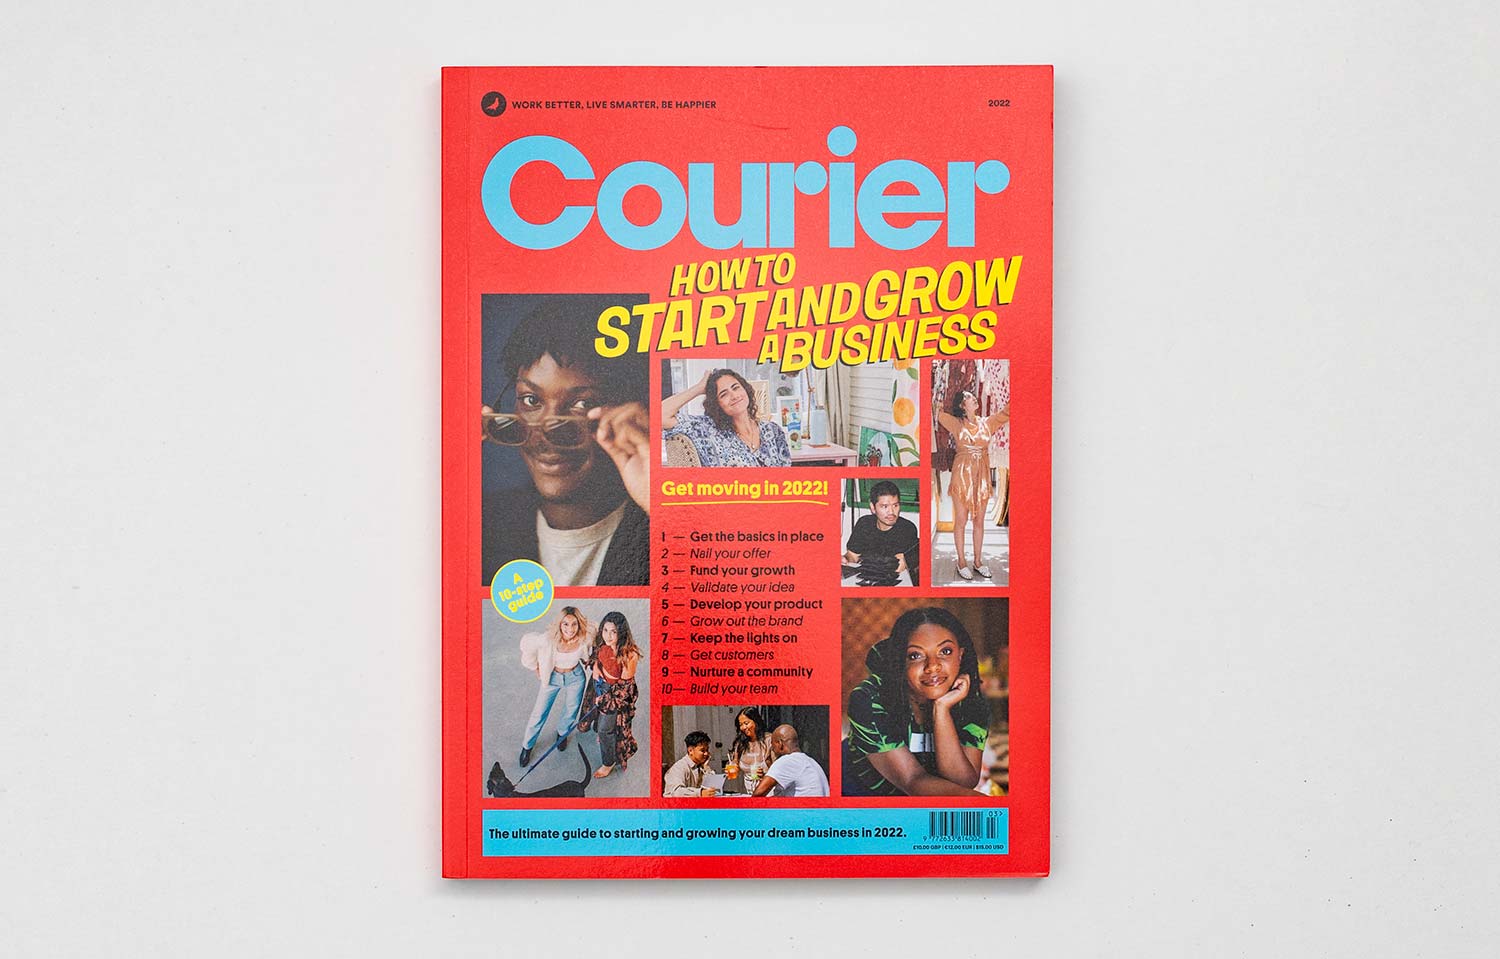 Revista "Courier" cubiertas